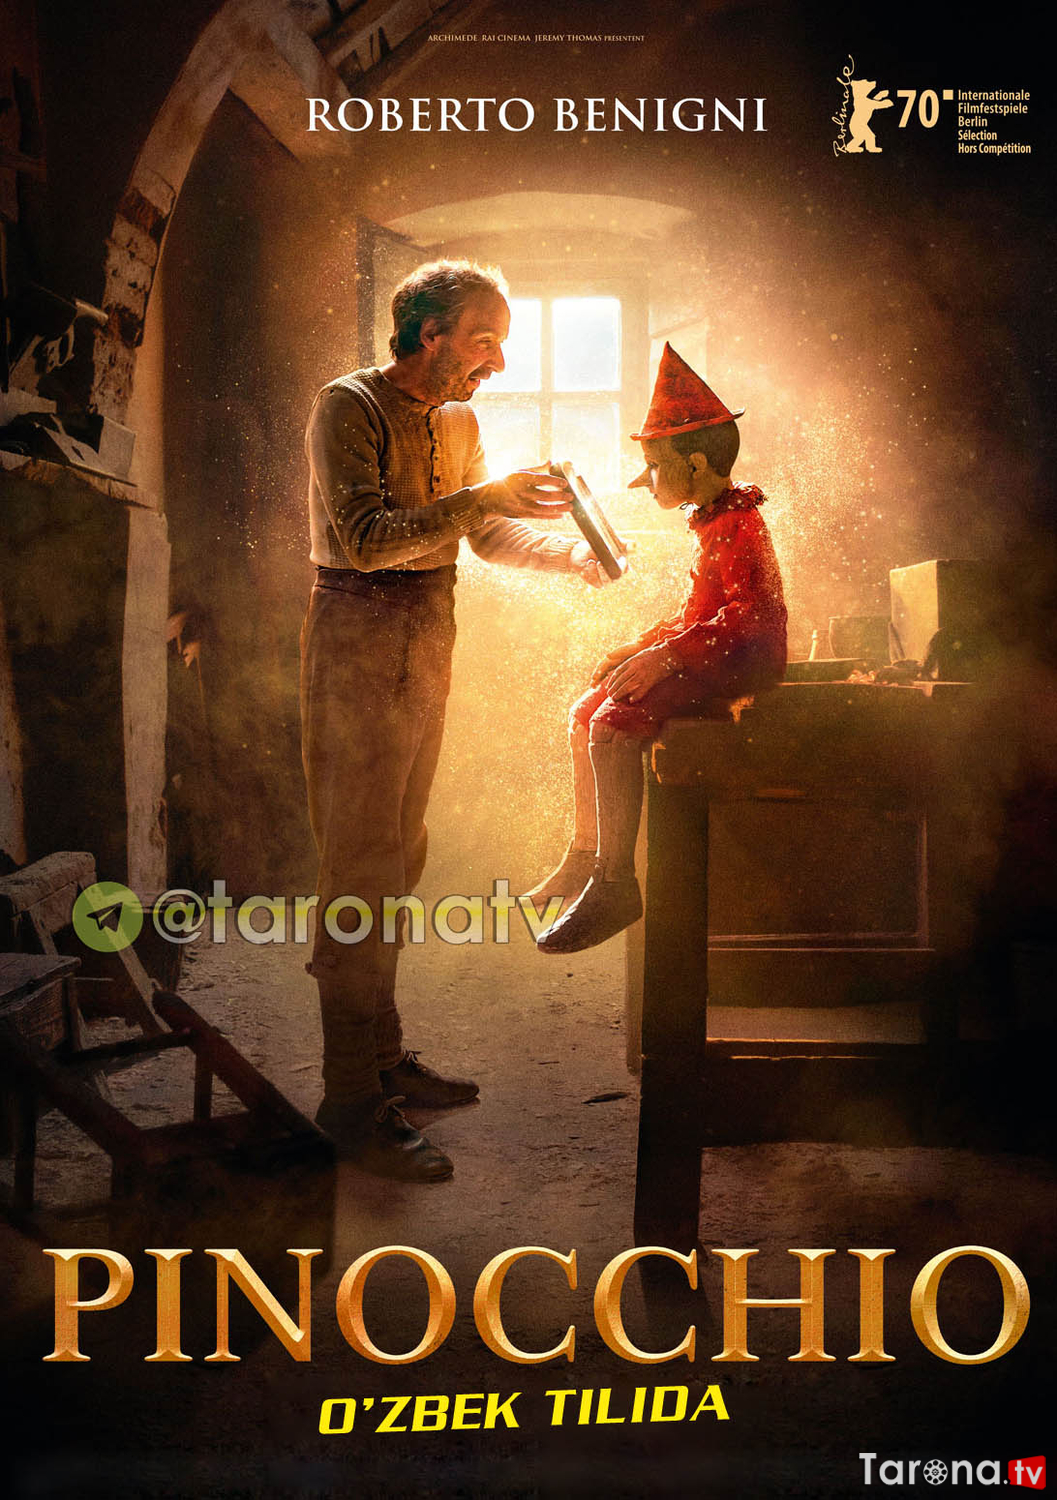 Pinokkio (Tarjima, O'zbek tilida) 2020